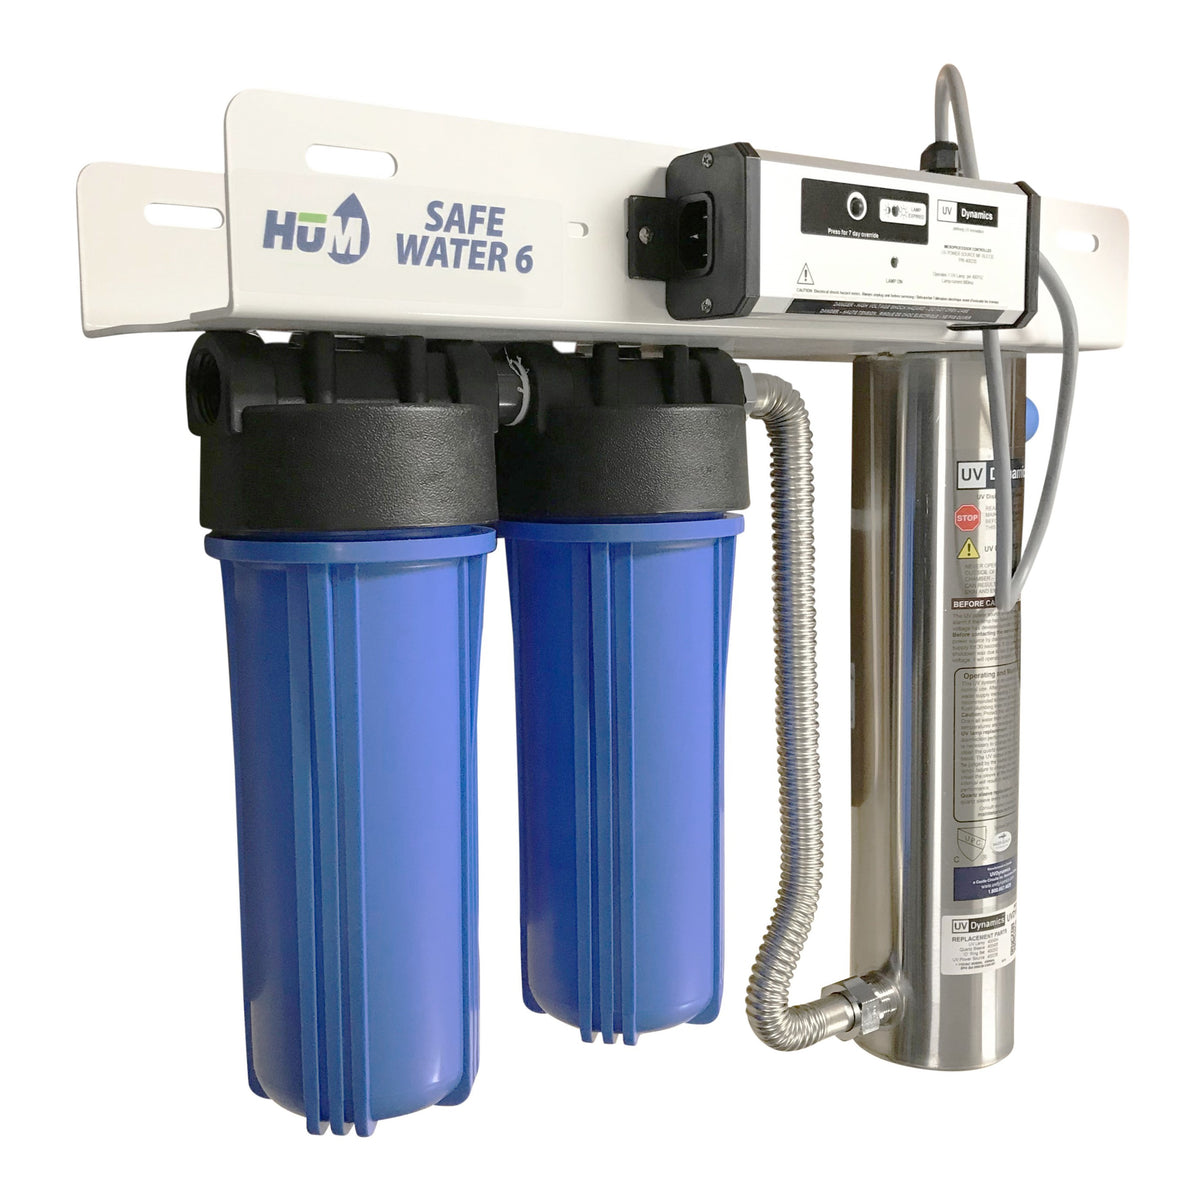 HUM Safe Water 6 UV Minirack System